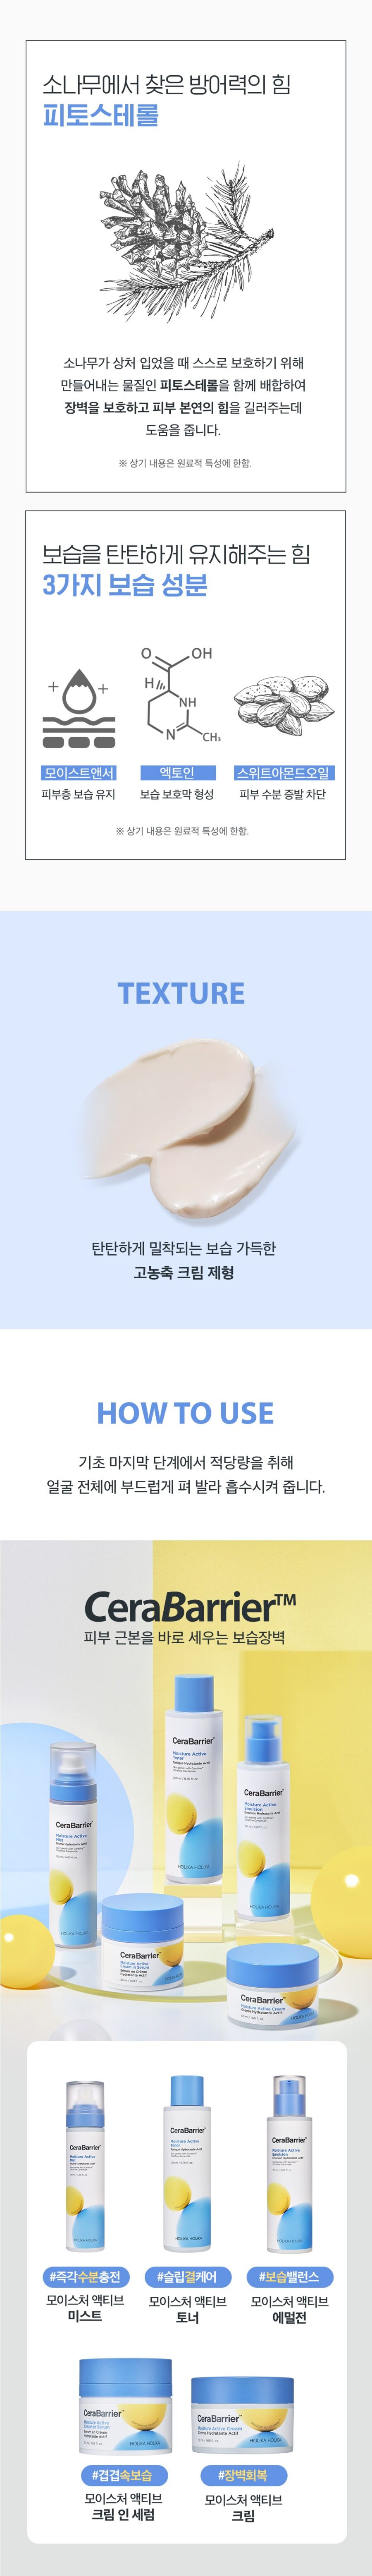 Holika Holika Cera Barrier Moisture Active Cream korean skincare product online shop malaysia china india6